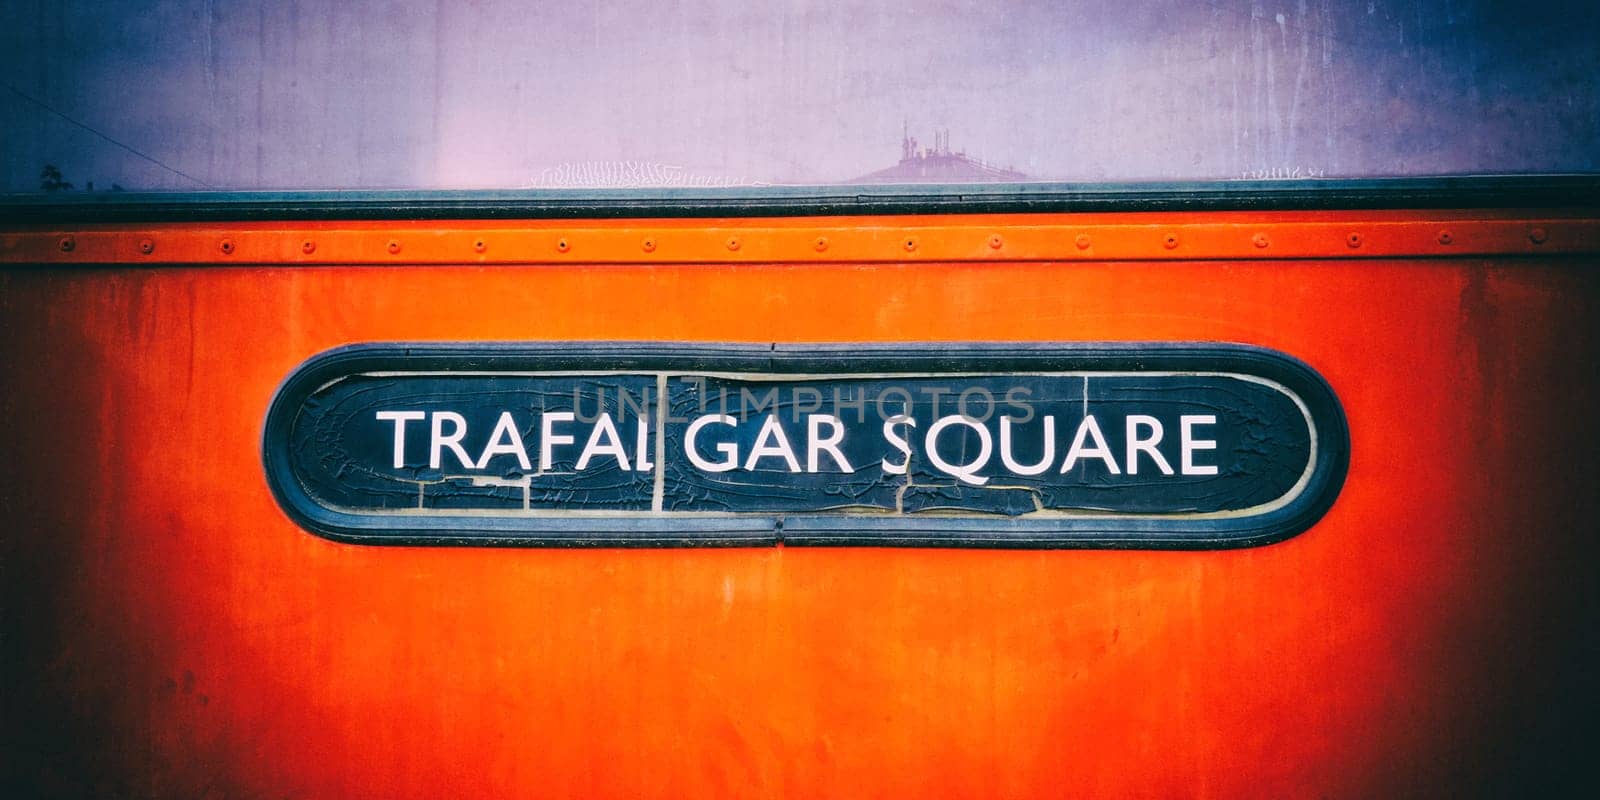 Trafalgar Square vintage sign on a London bus. Vintage camera filter added to image by DAndreev